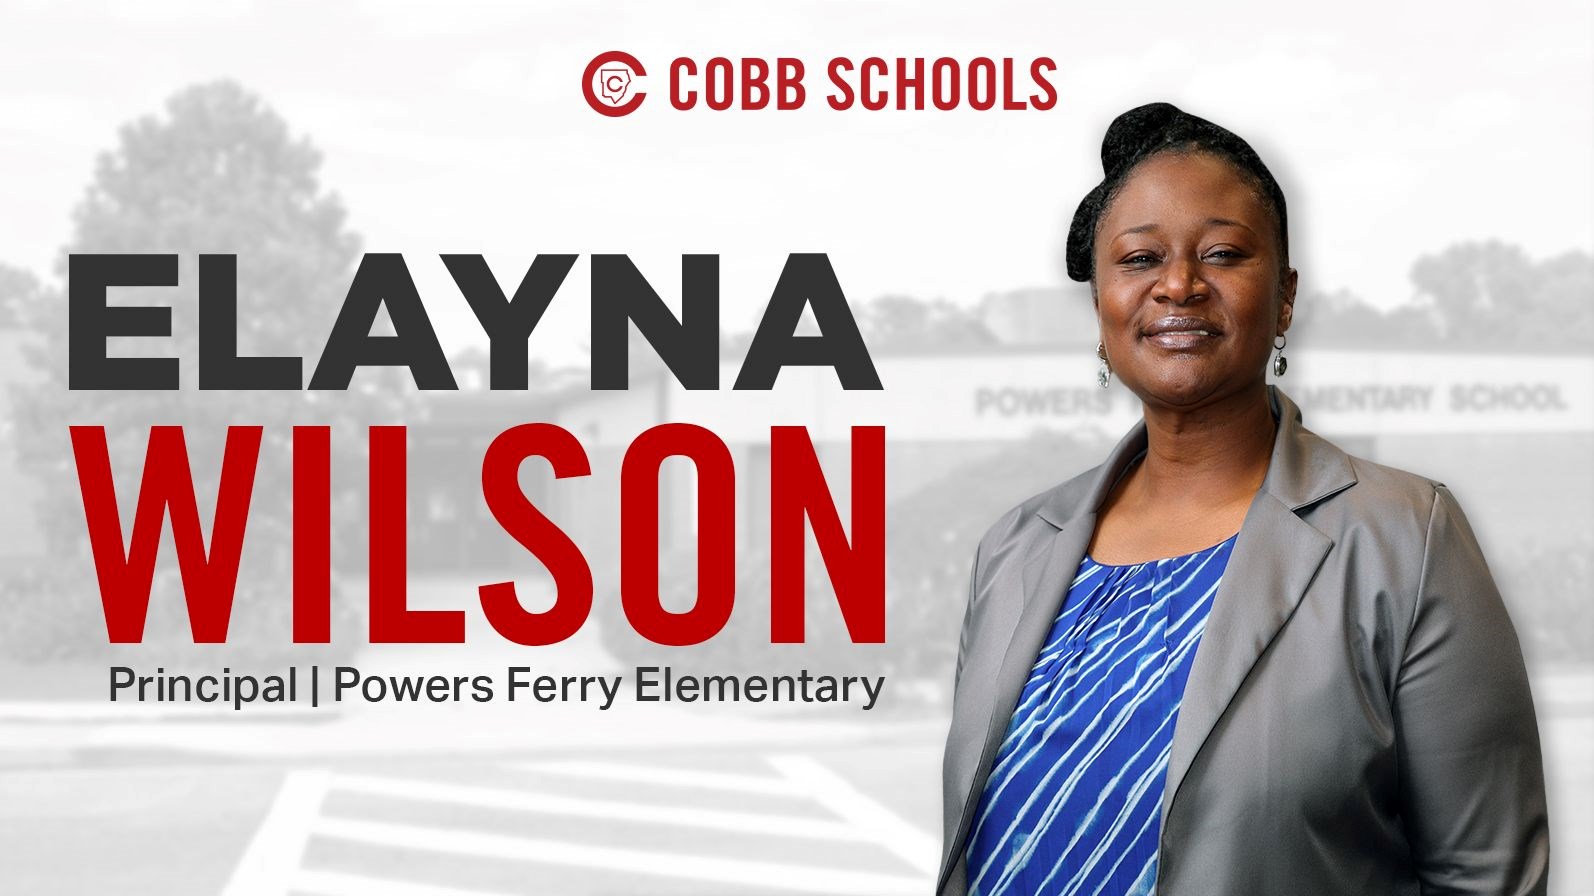 Principal Elayna Wilson was named principal of Powers Ferry Elementary School.